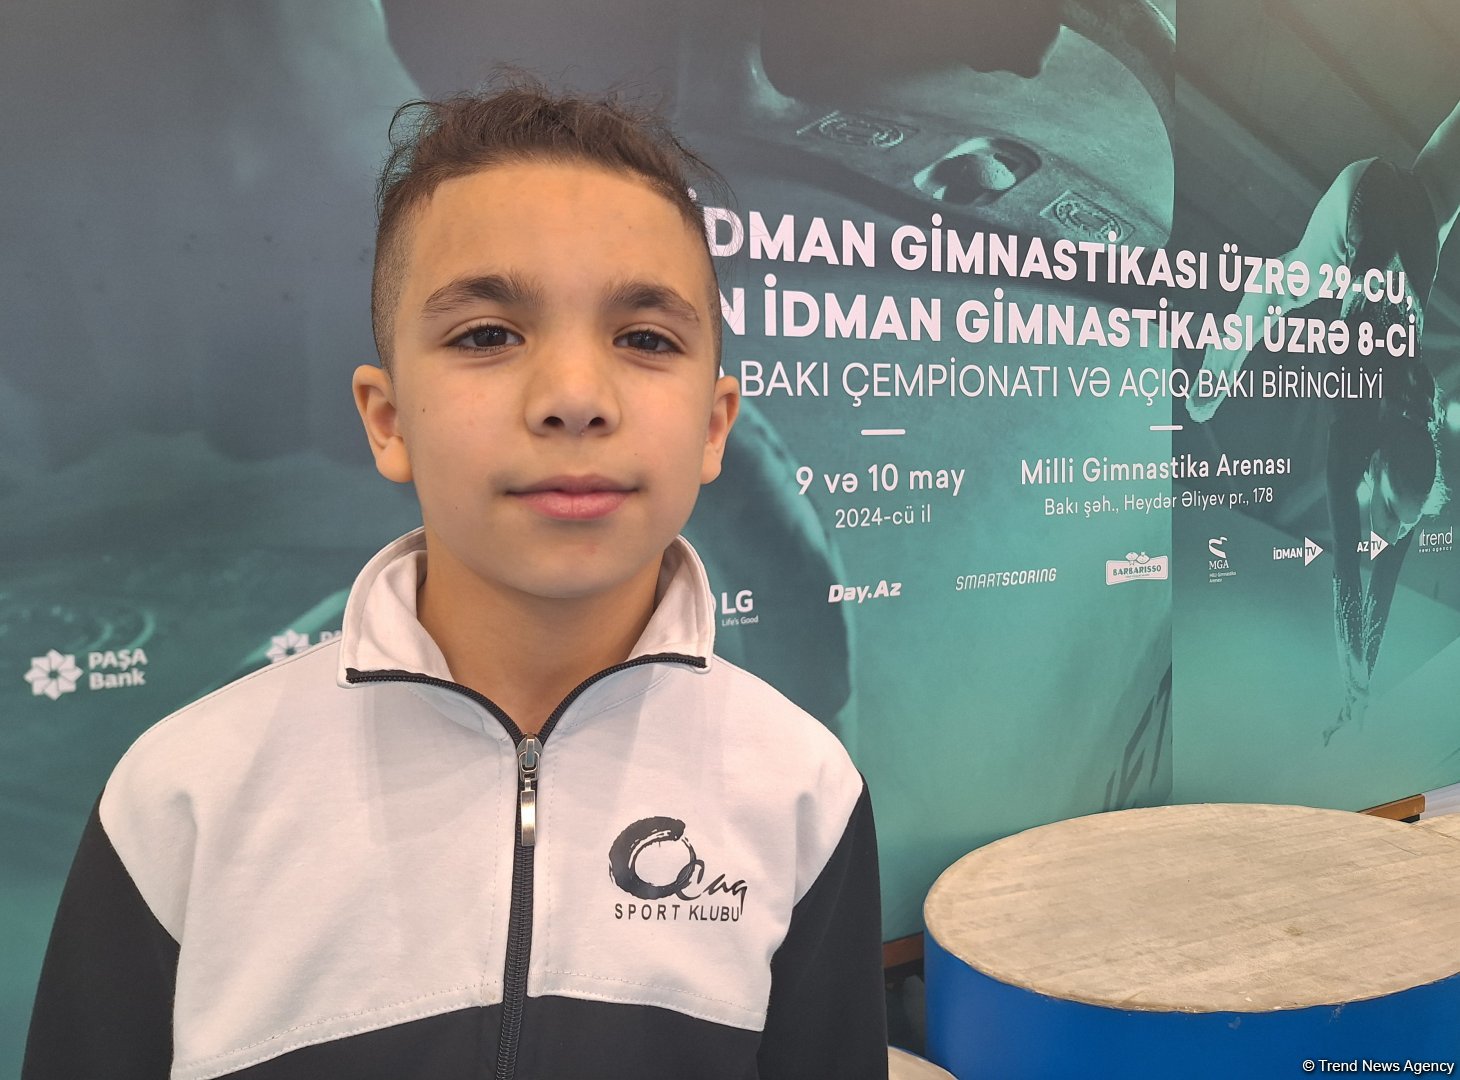 Coach pleased with my performance at Baku Championships - young Azerbaijani gymnast